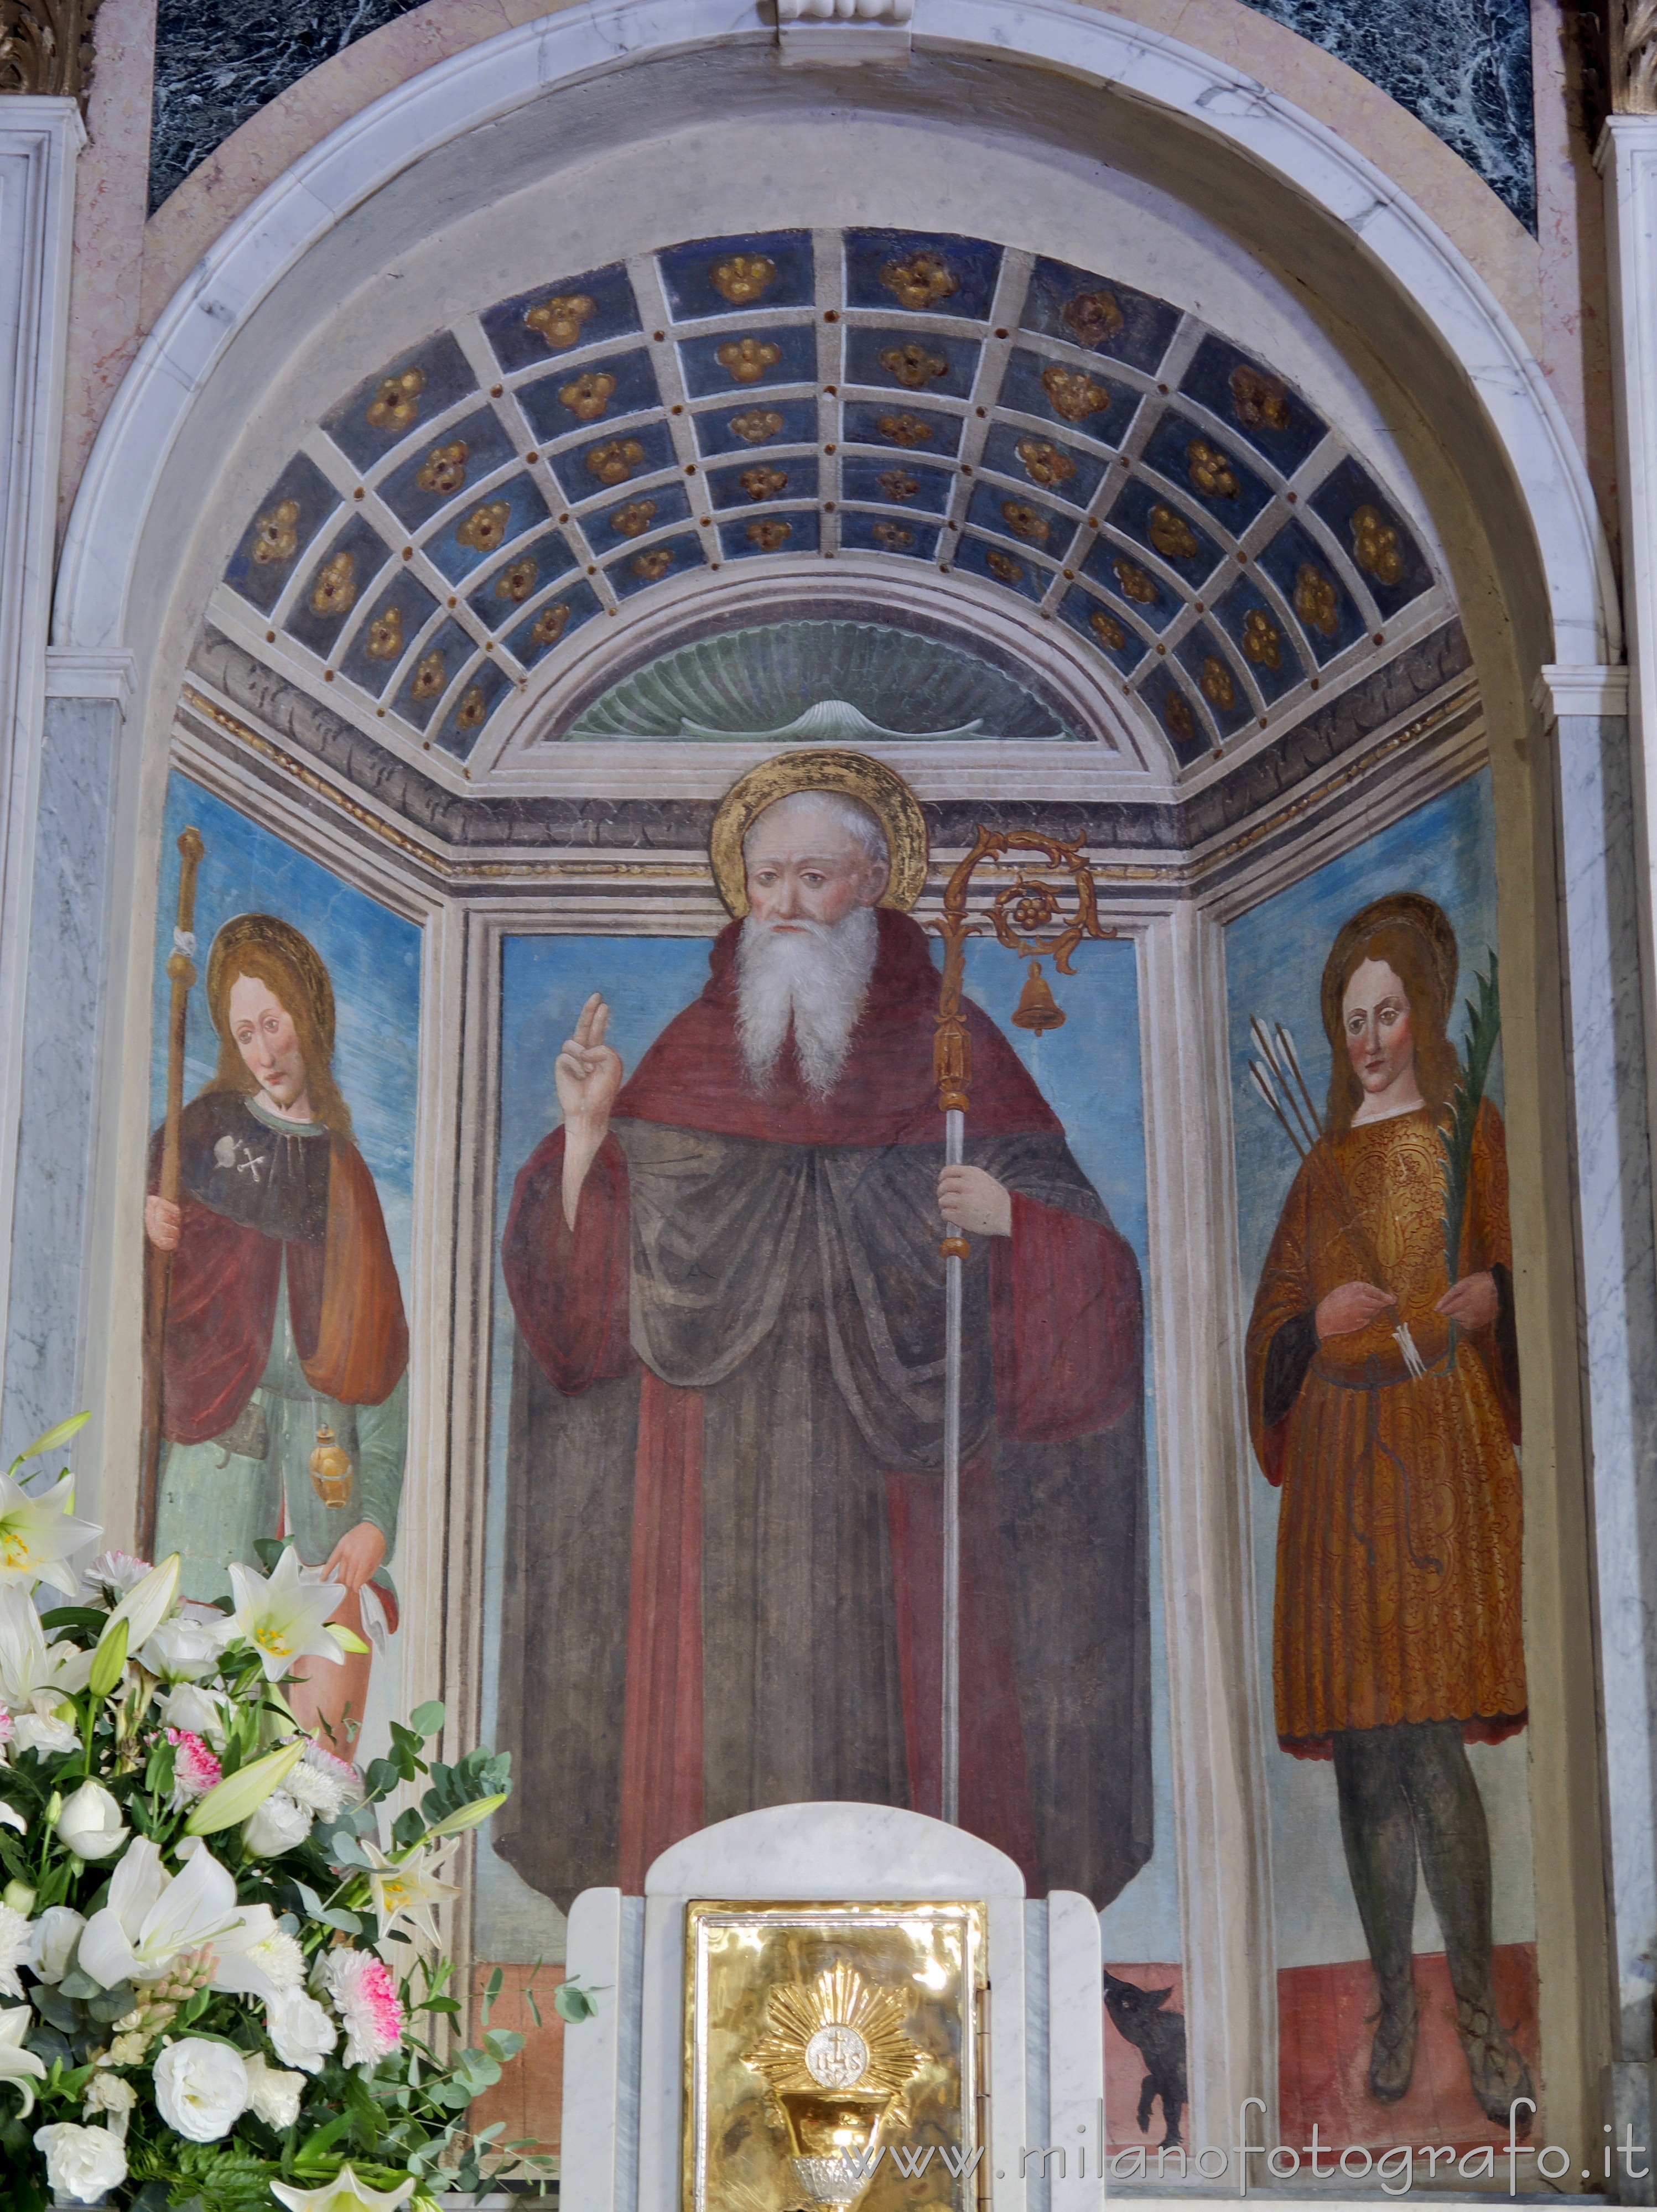 Trezzano sul Naviglio (Milan, Italy): Fresco of St. Anthony Abbot in the Church of Sant'Ambrogio - Trezzano sul Naviglio (Milan, Italy)